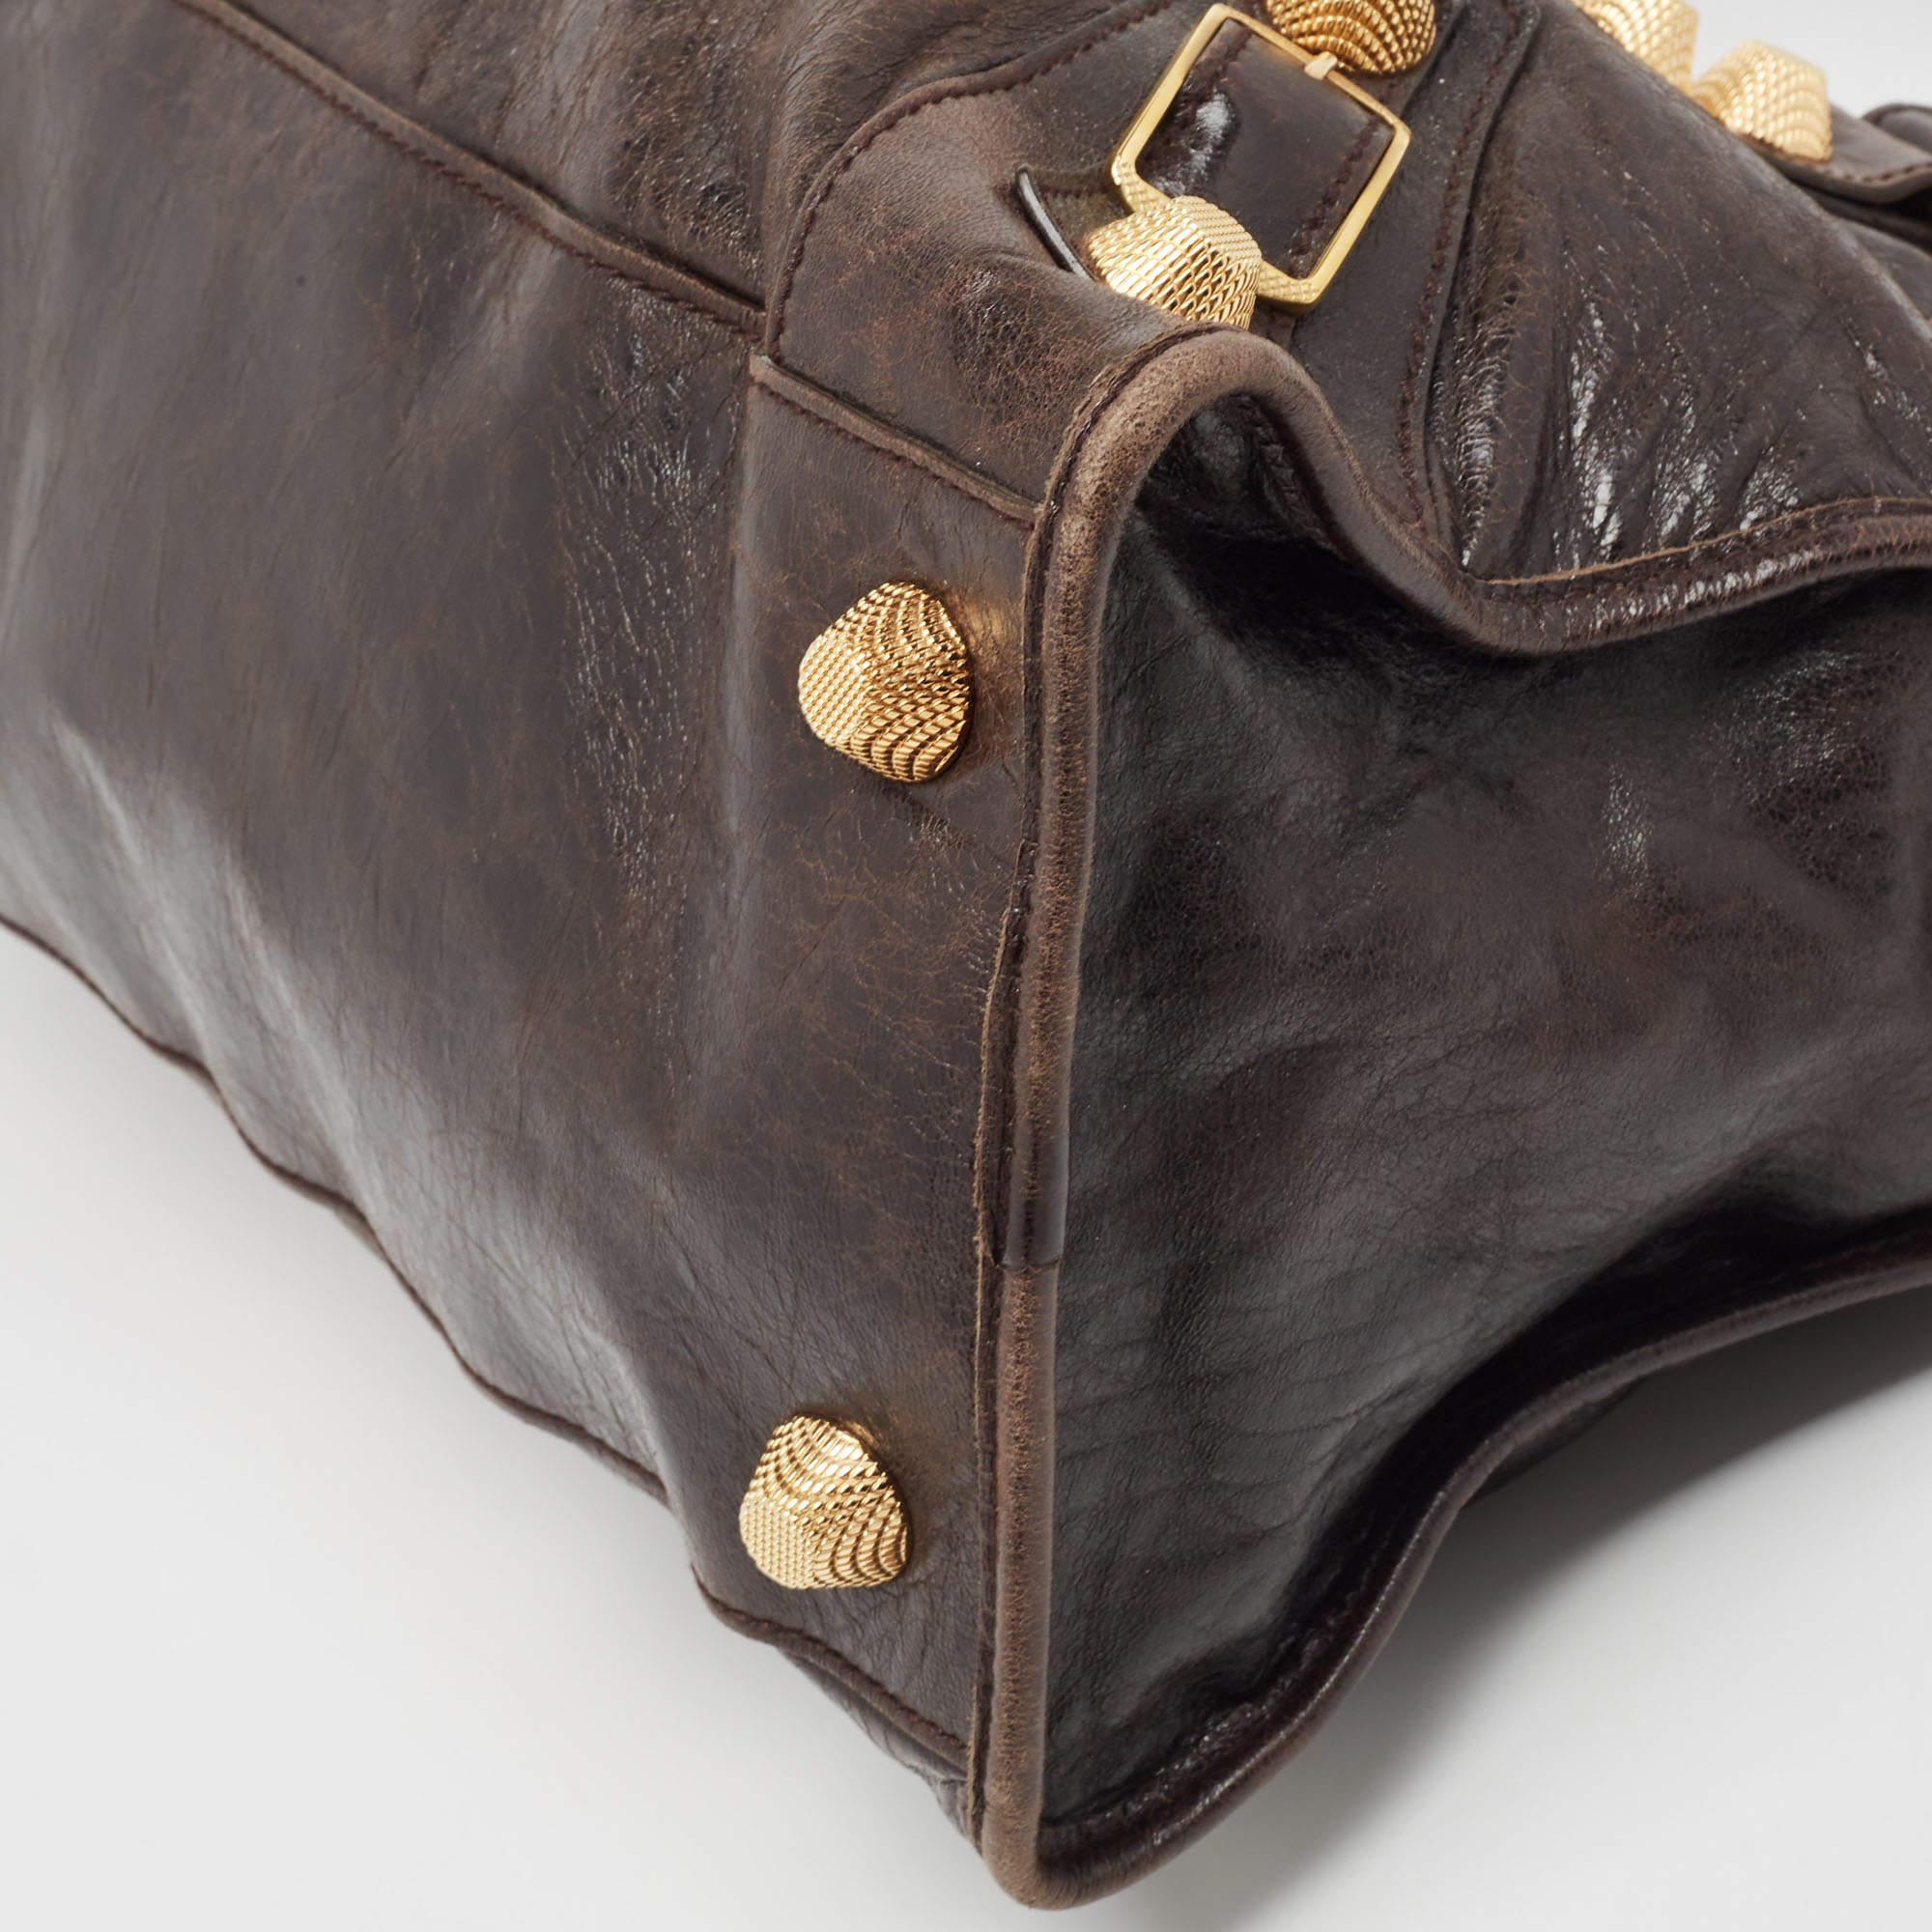 Balenciaga Dark Brown Leather GGH Part Time Bag For Sale 2